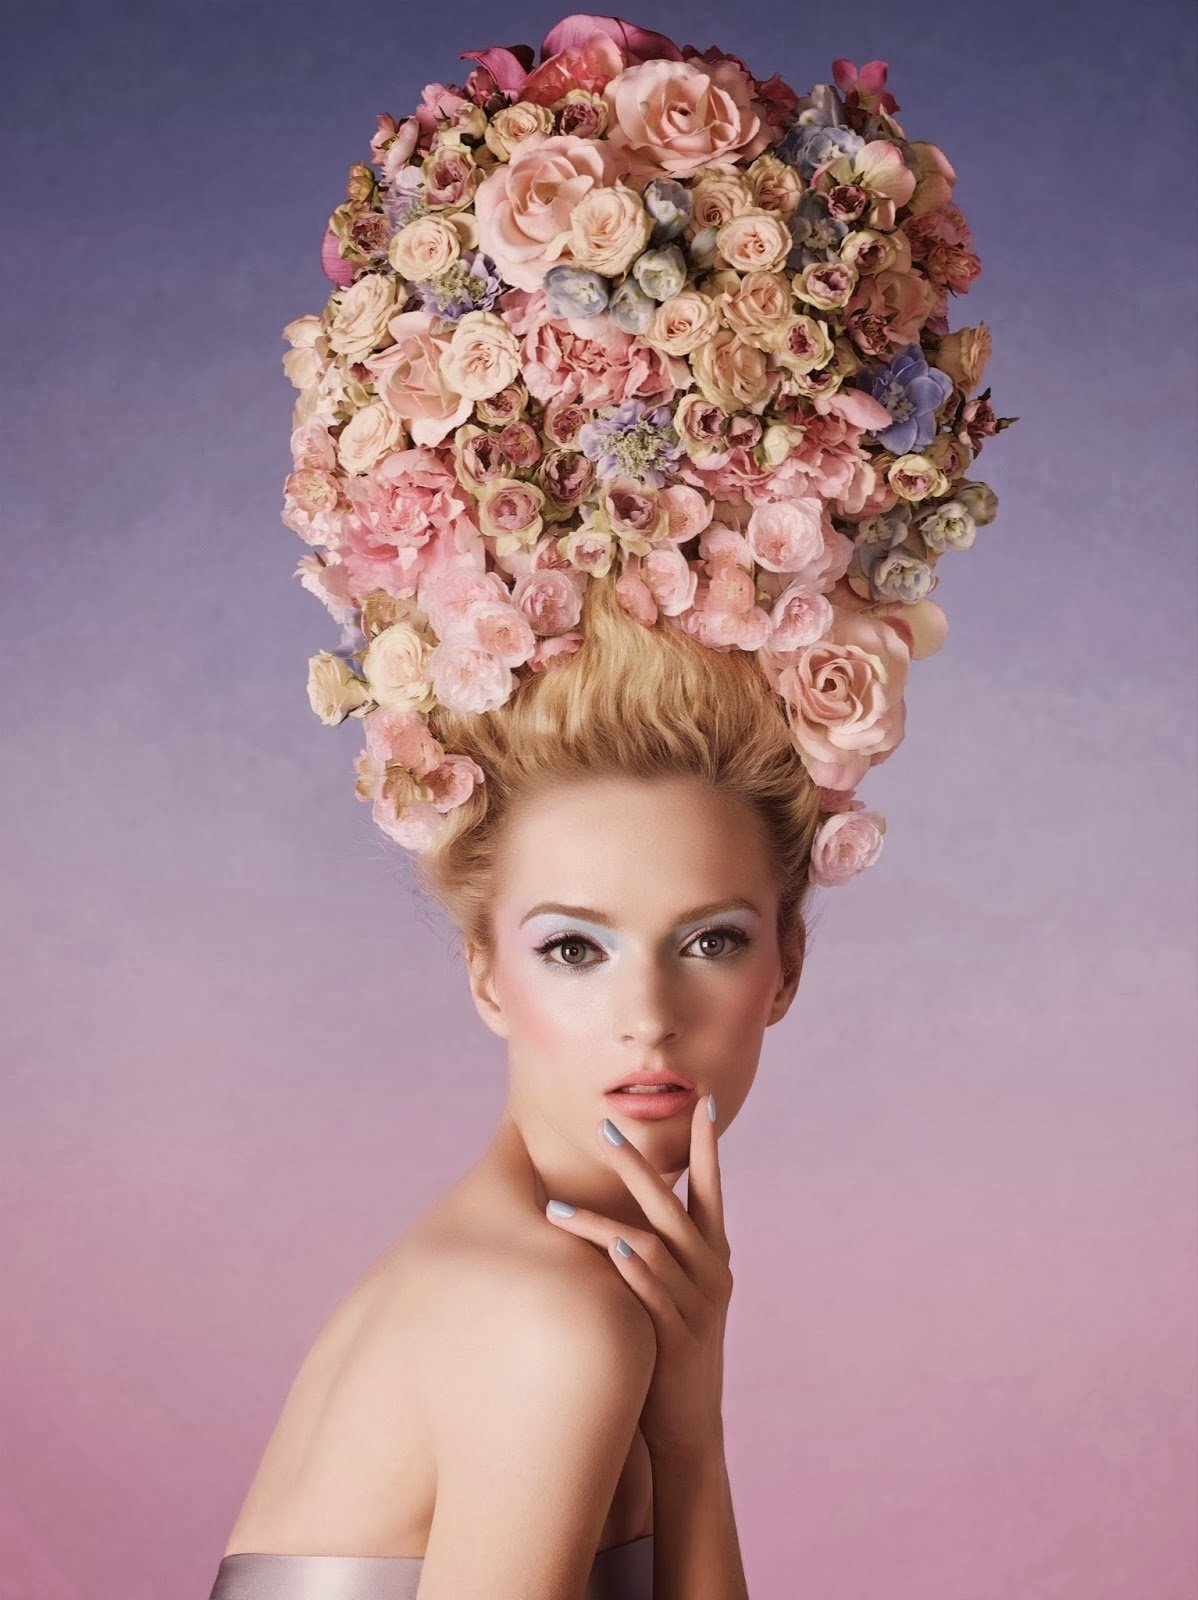 Daria+Strokous+for+Dior+Beauty+2014-001.jpg